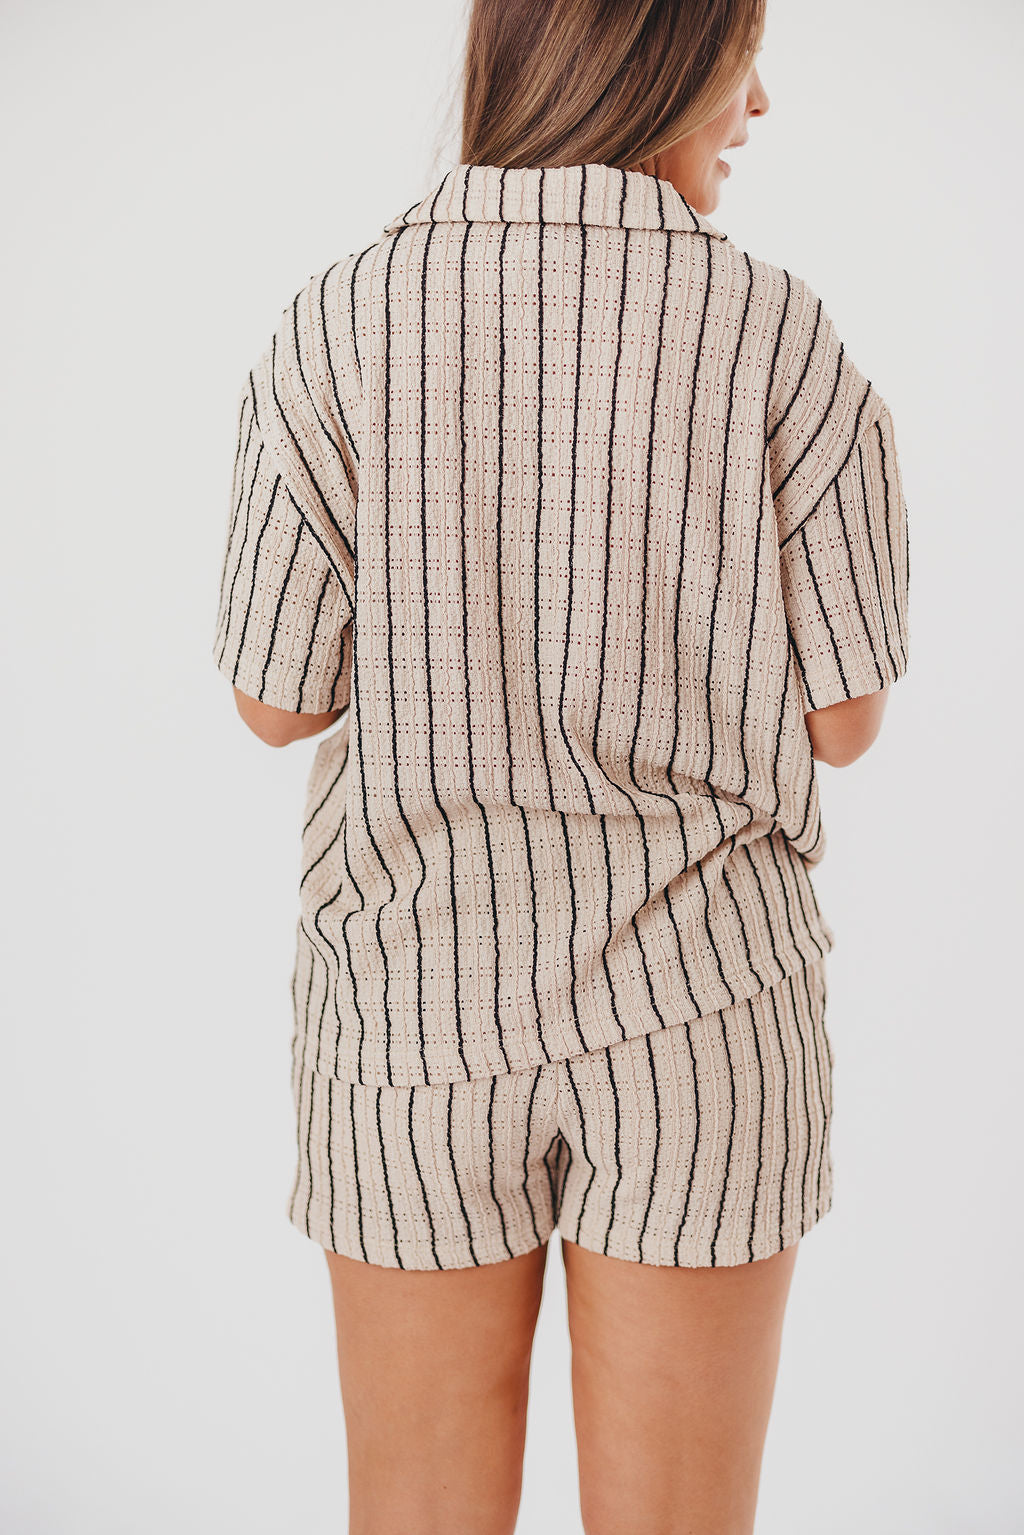 Jasmine Button-Up and Shorts Set in Tan Stripe - Nursing Friendly